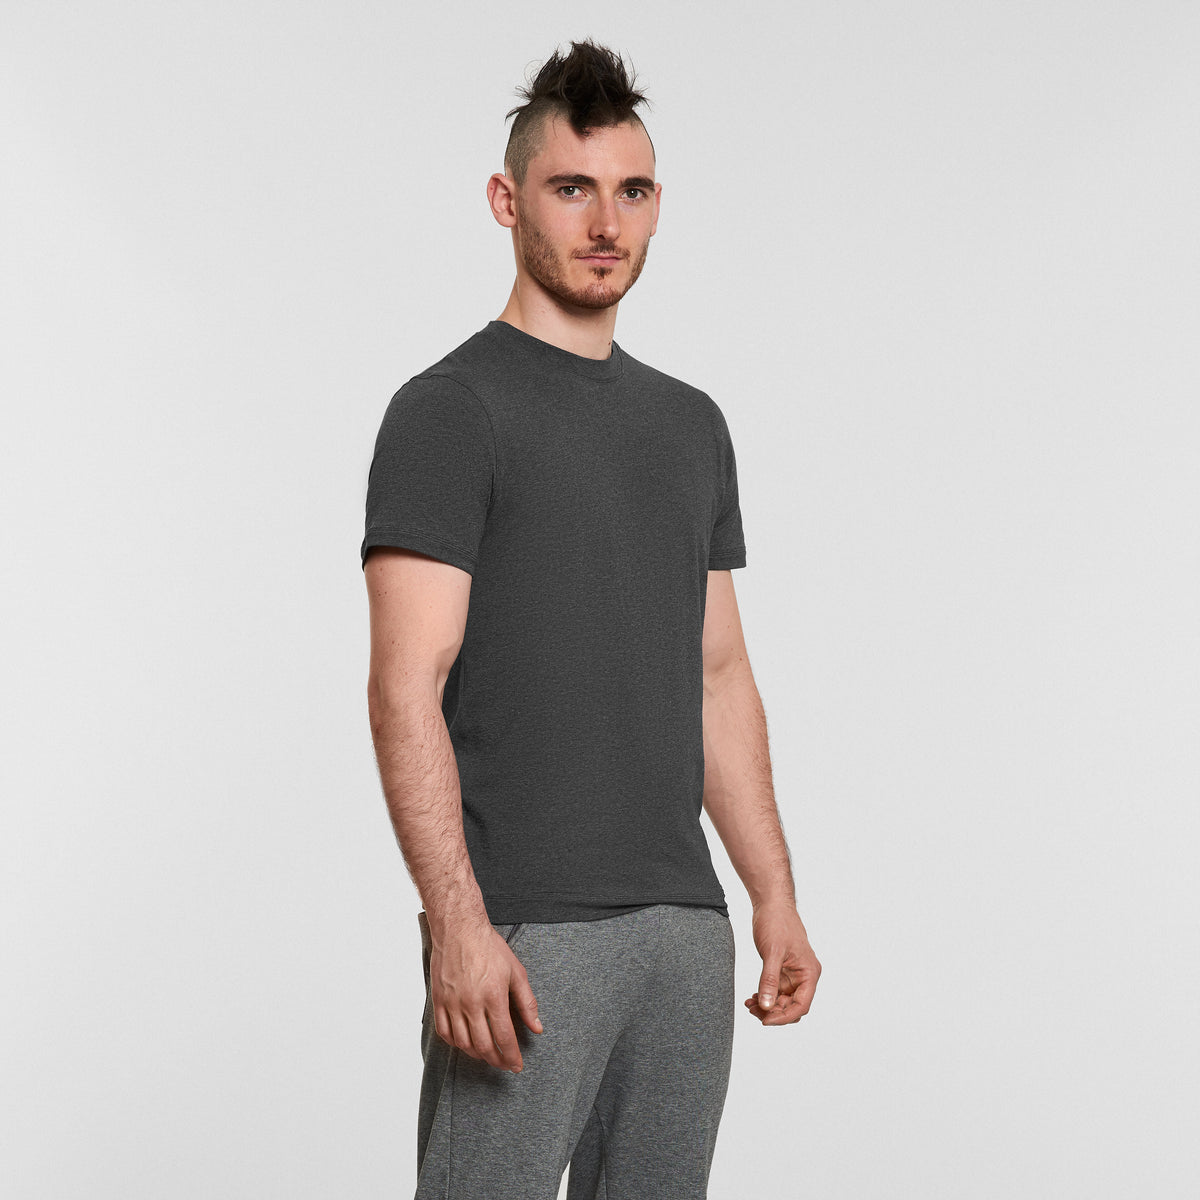 man wearing grey mens yoga t-shirt by warrior addict 